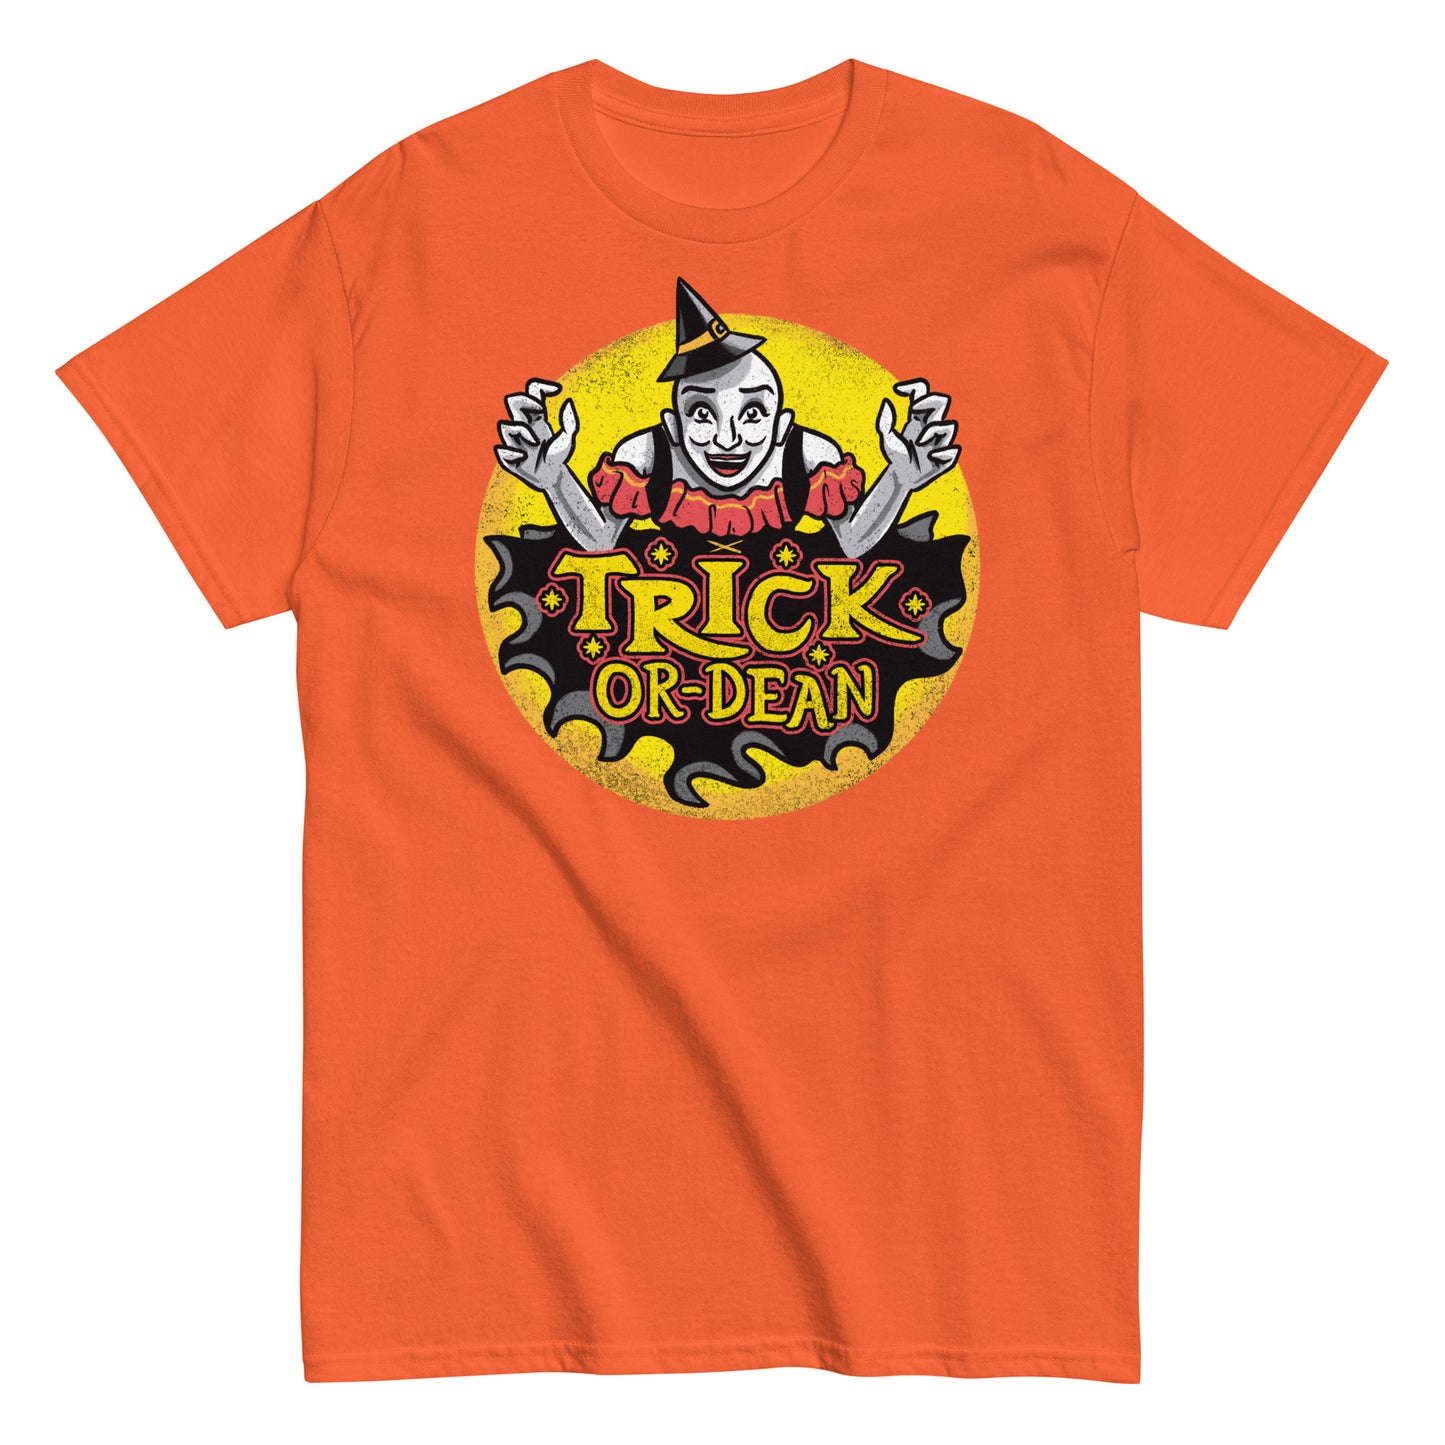 Trick or Dean -  Halloween T-Shirt Funny for TV Fans of Community Dean Pelton Spirit Halloween Parody